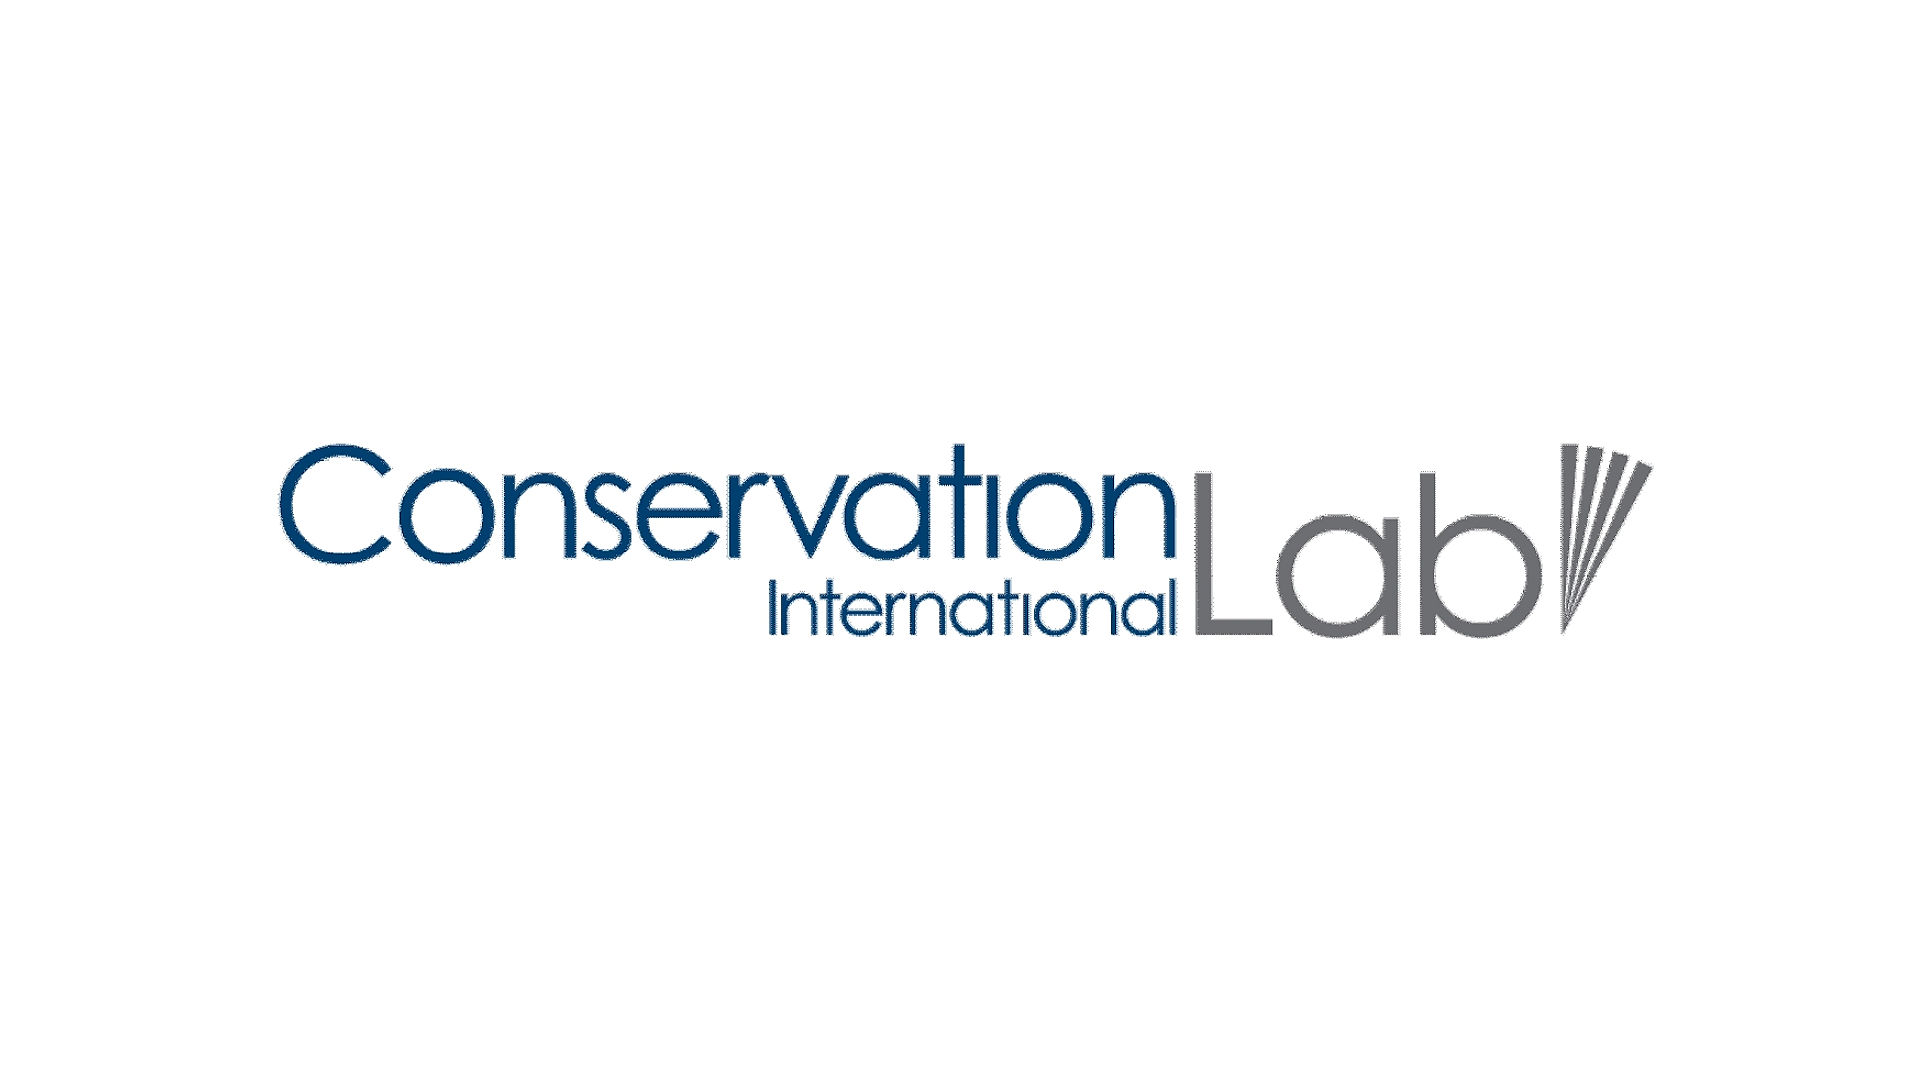 Conservation Lab International